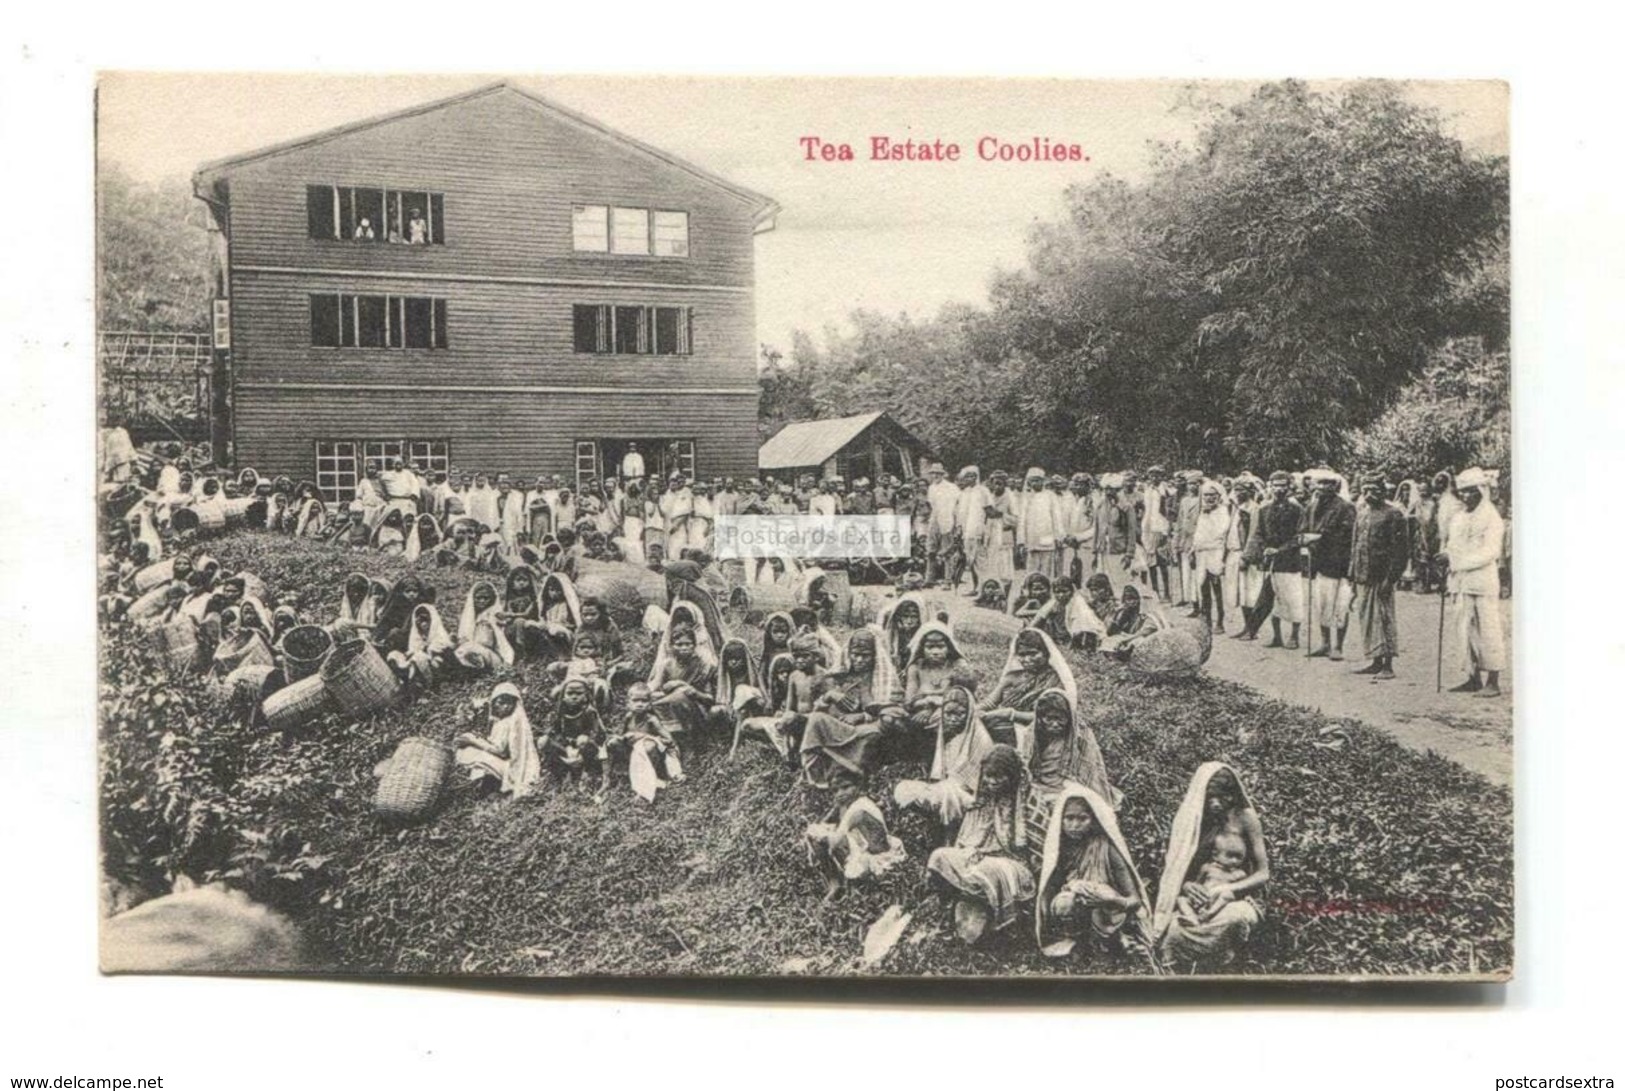 Ceylon - Tea Estate Coolies, Child Labour - Old Postcard - Sri Lanka (Ceylon)